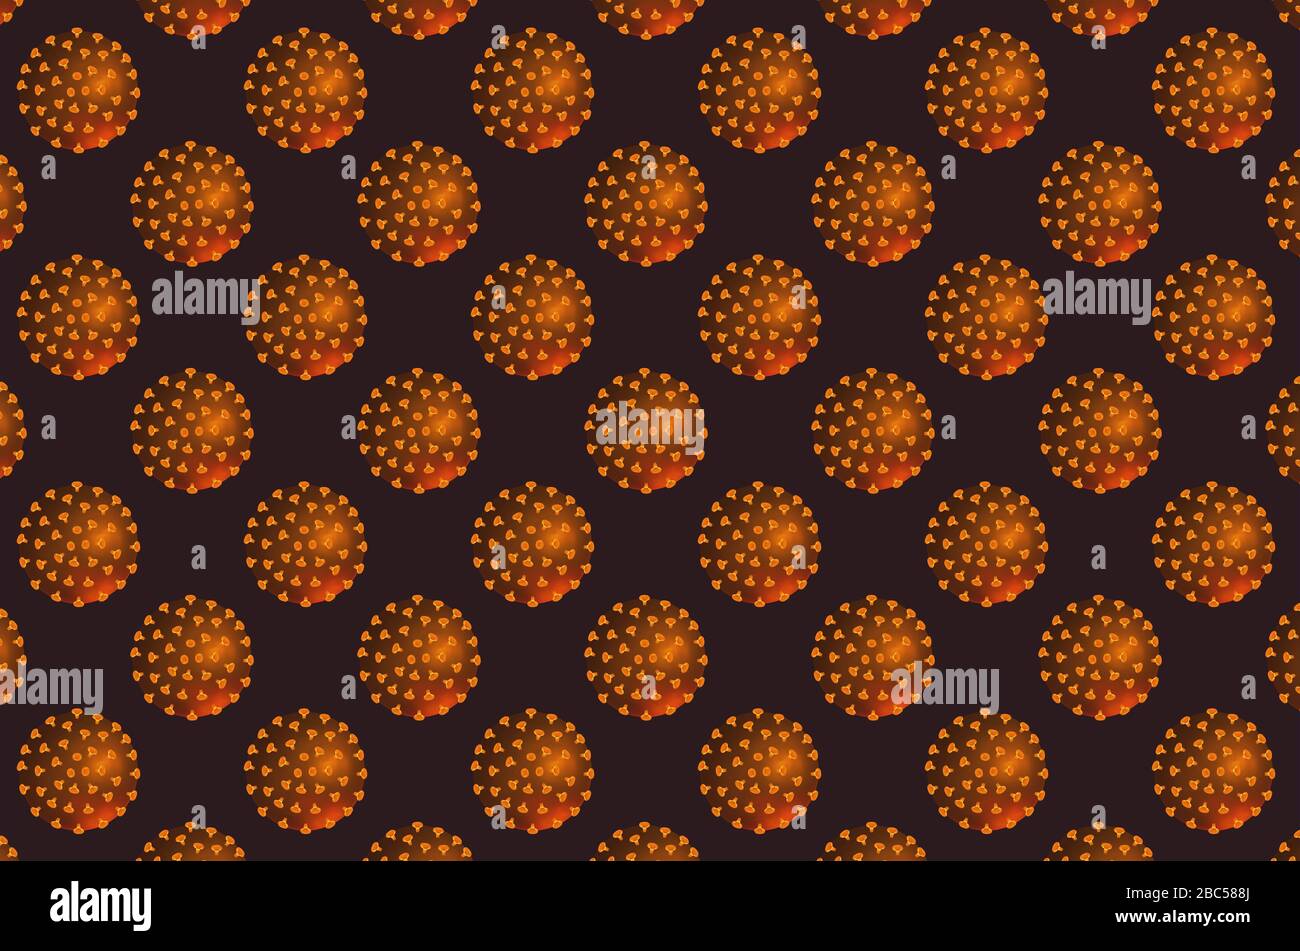 Abstract fractal pattern of the molecules of coronavirus. Stock Photo